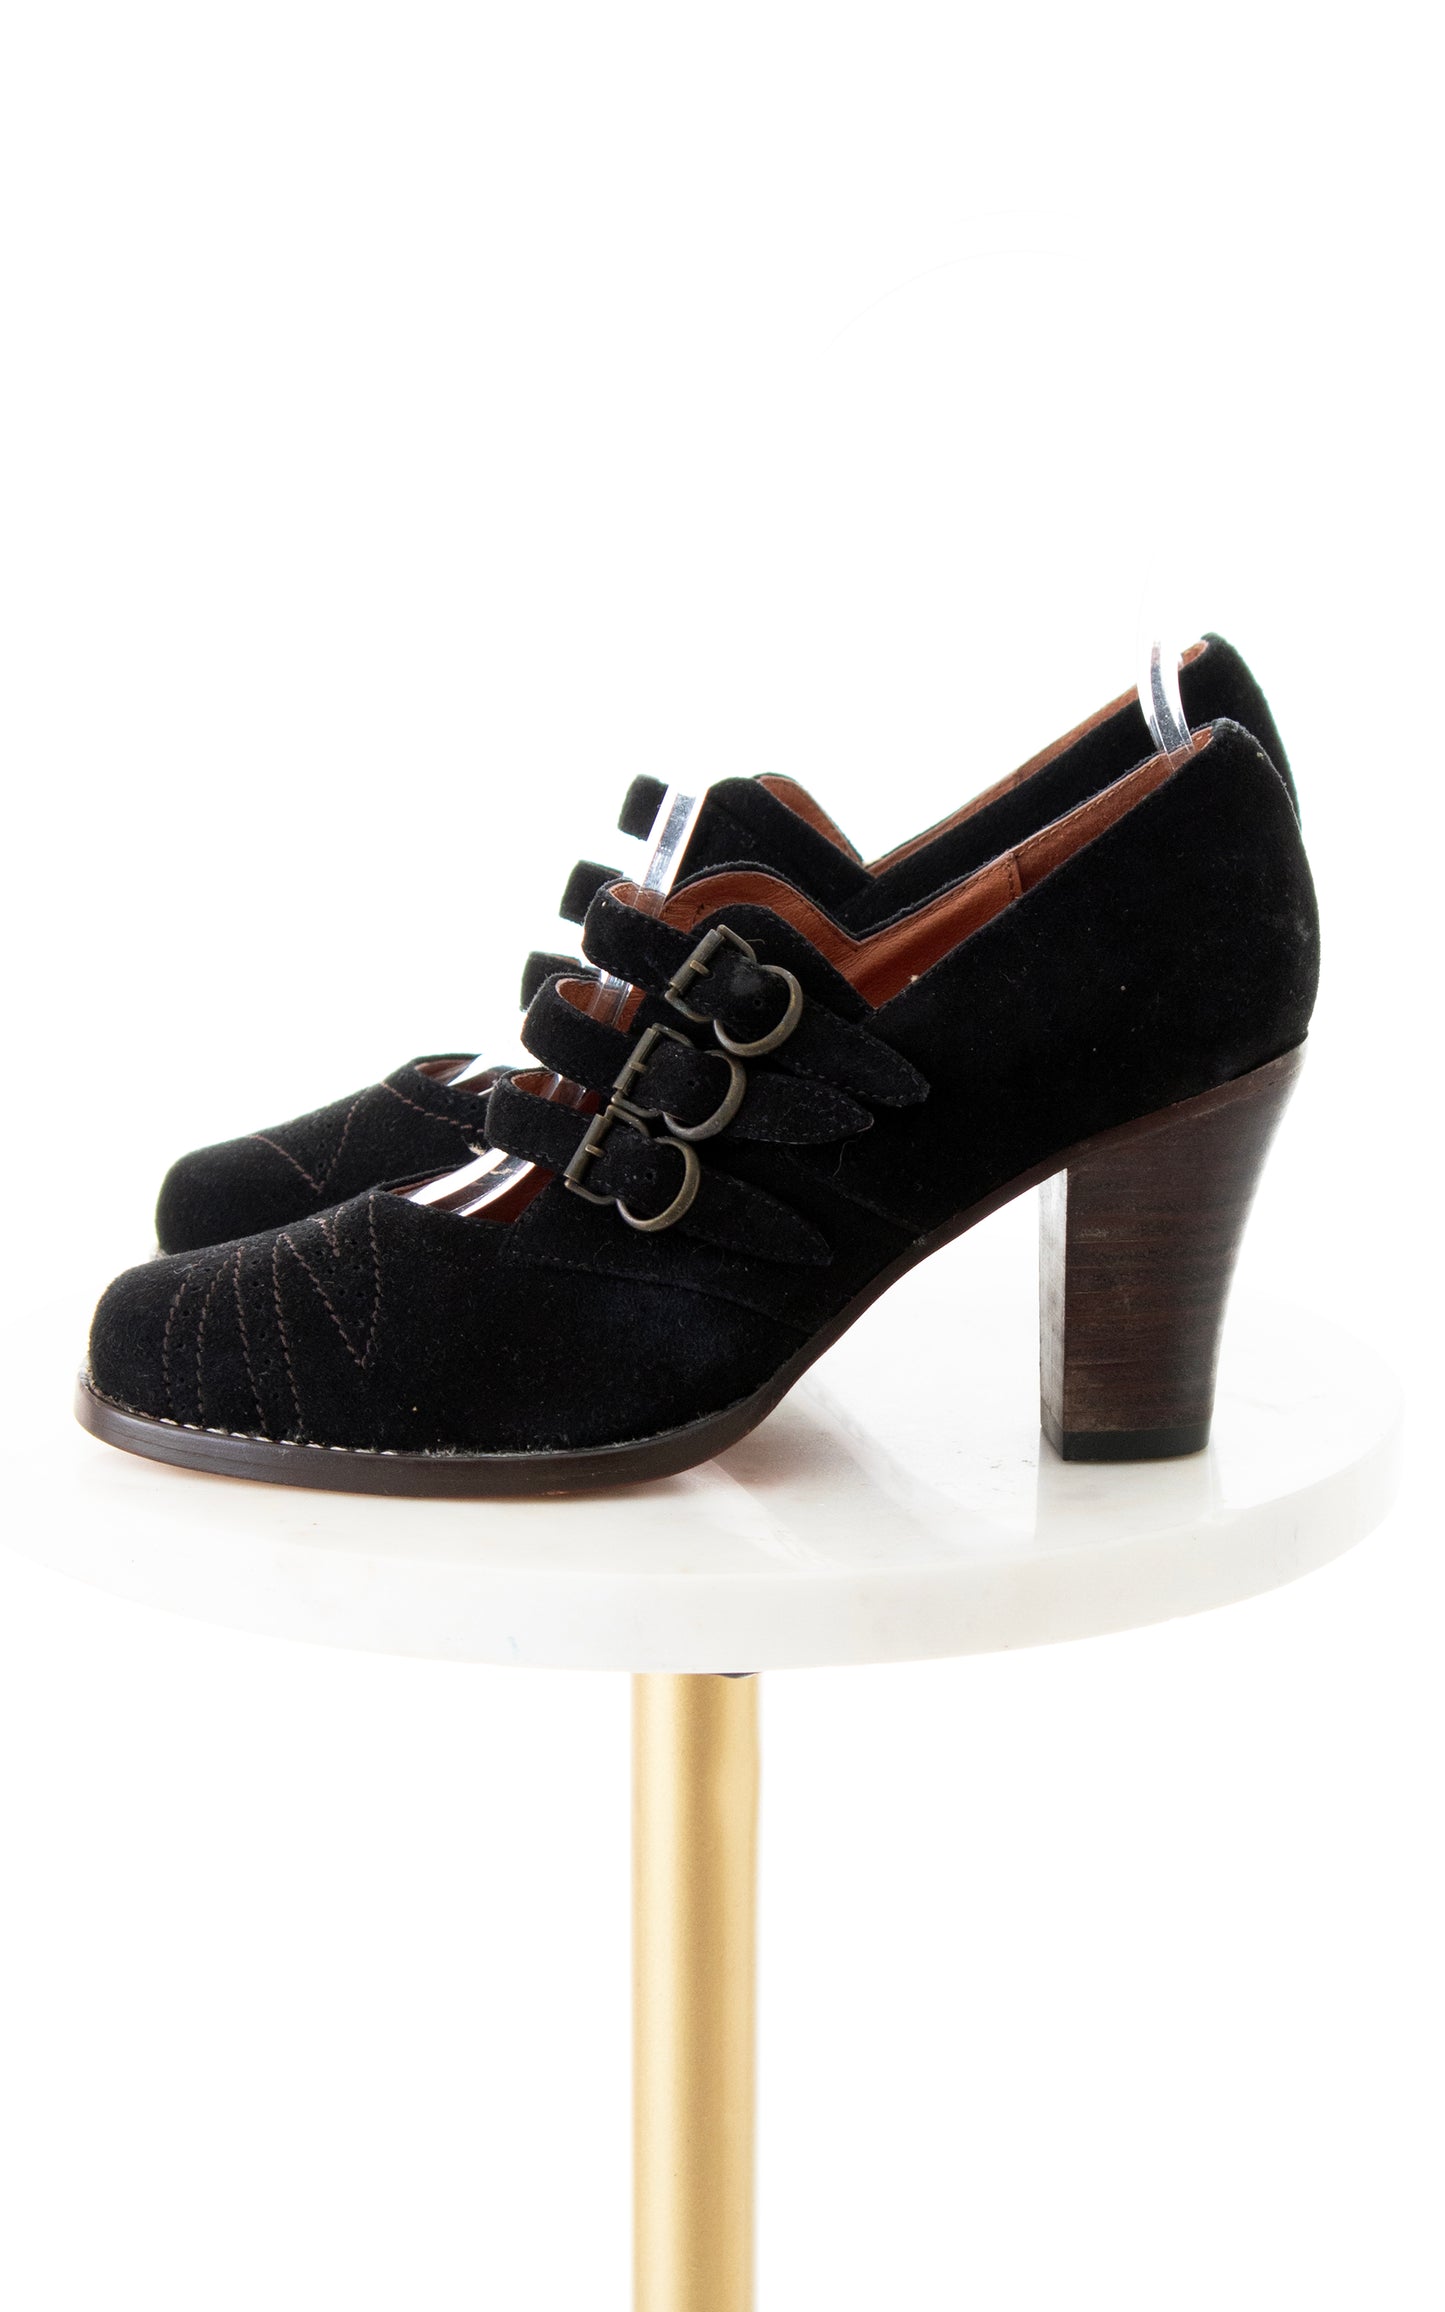 DEADSTOCK Modern REMIX 1930s Style "Amelia" Heels | size US 5.5